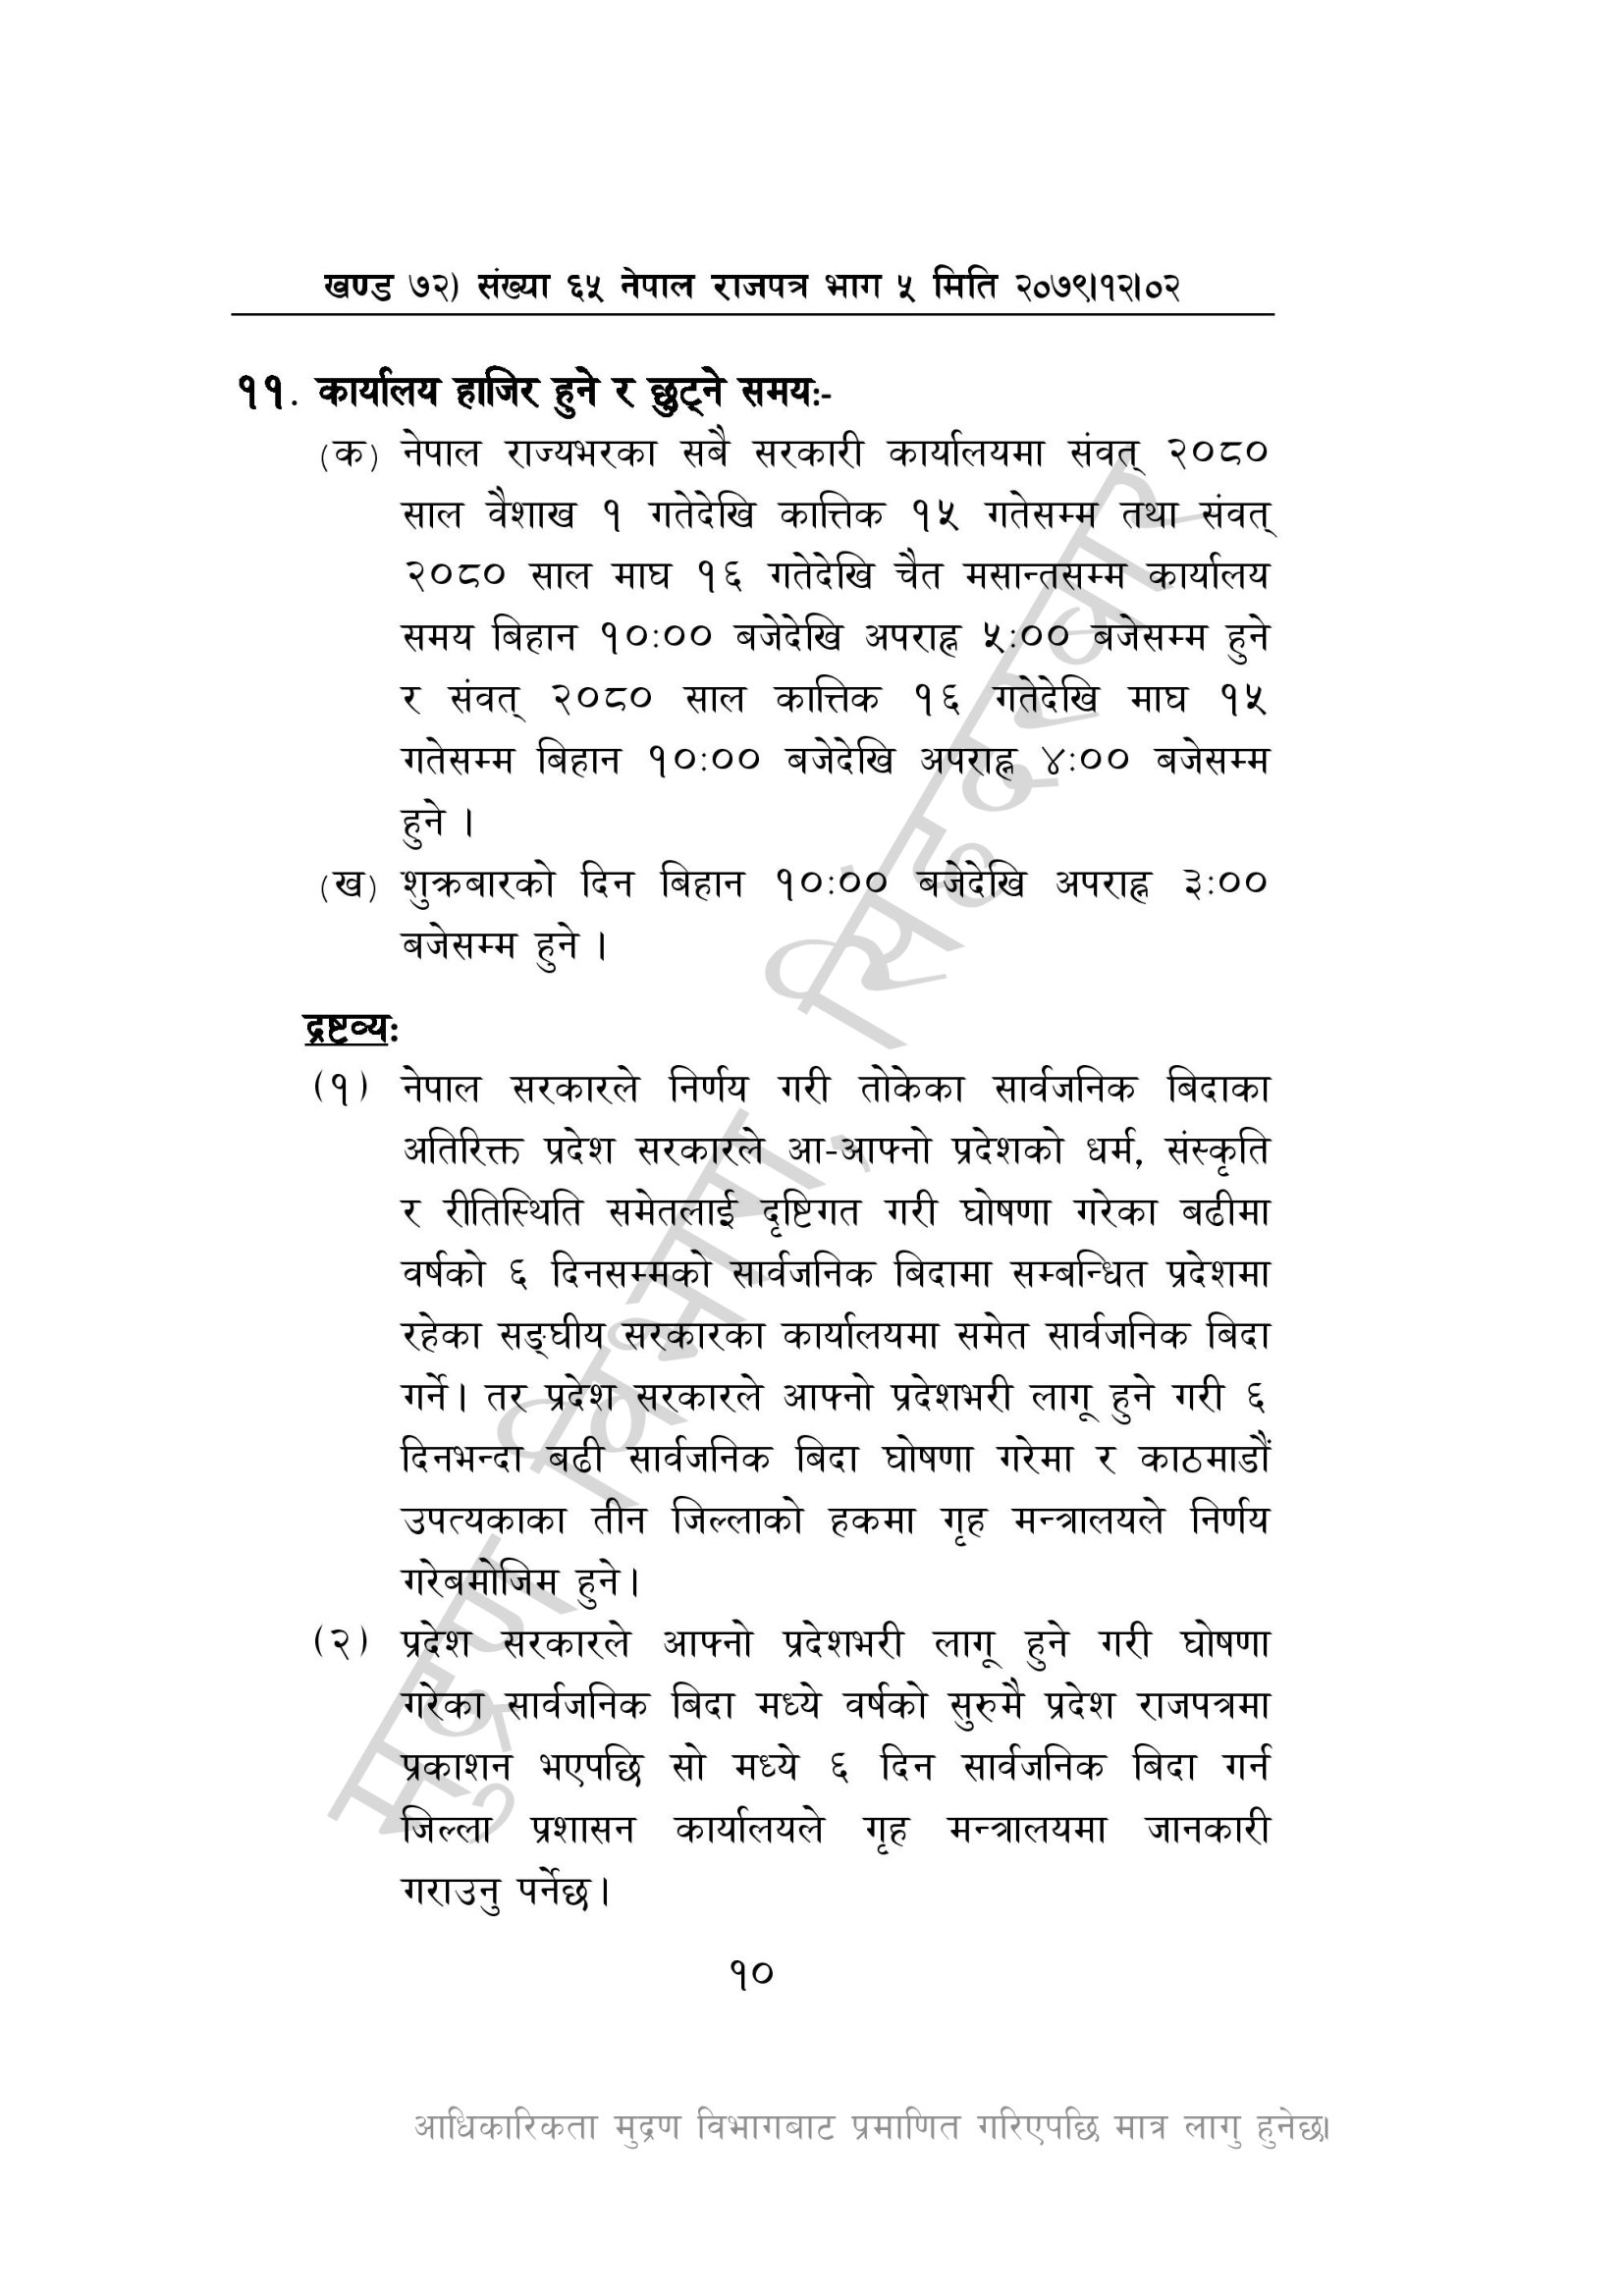 Public Holidays List of 2080 B.S. Published By Government Of Nepal - Sarbajanik Bida 2080